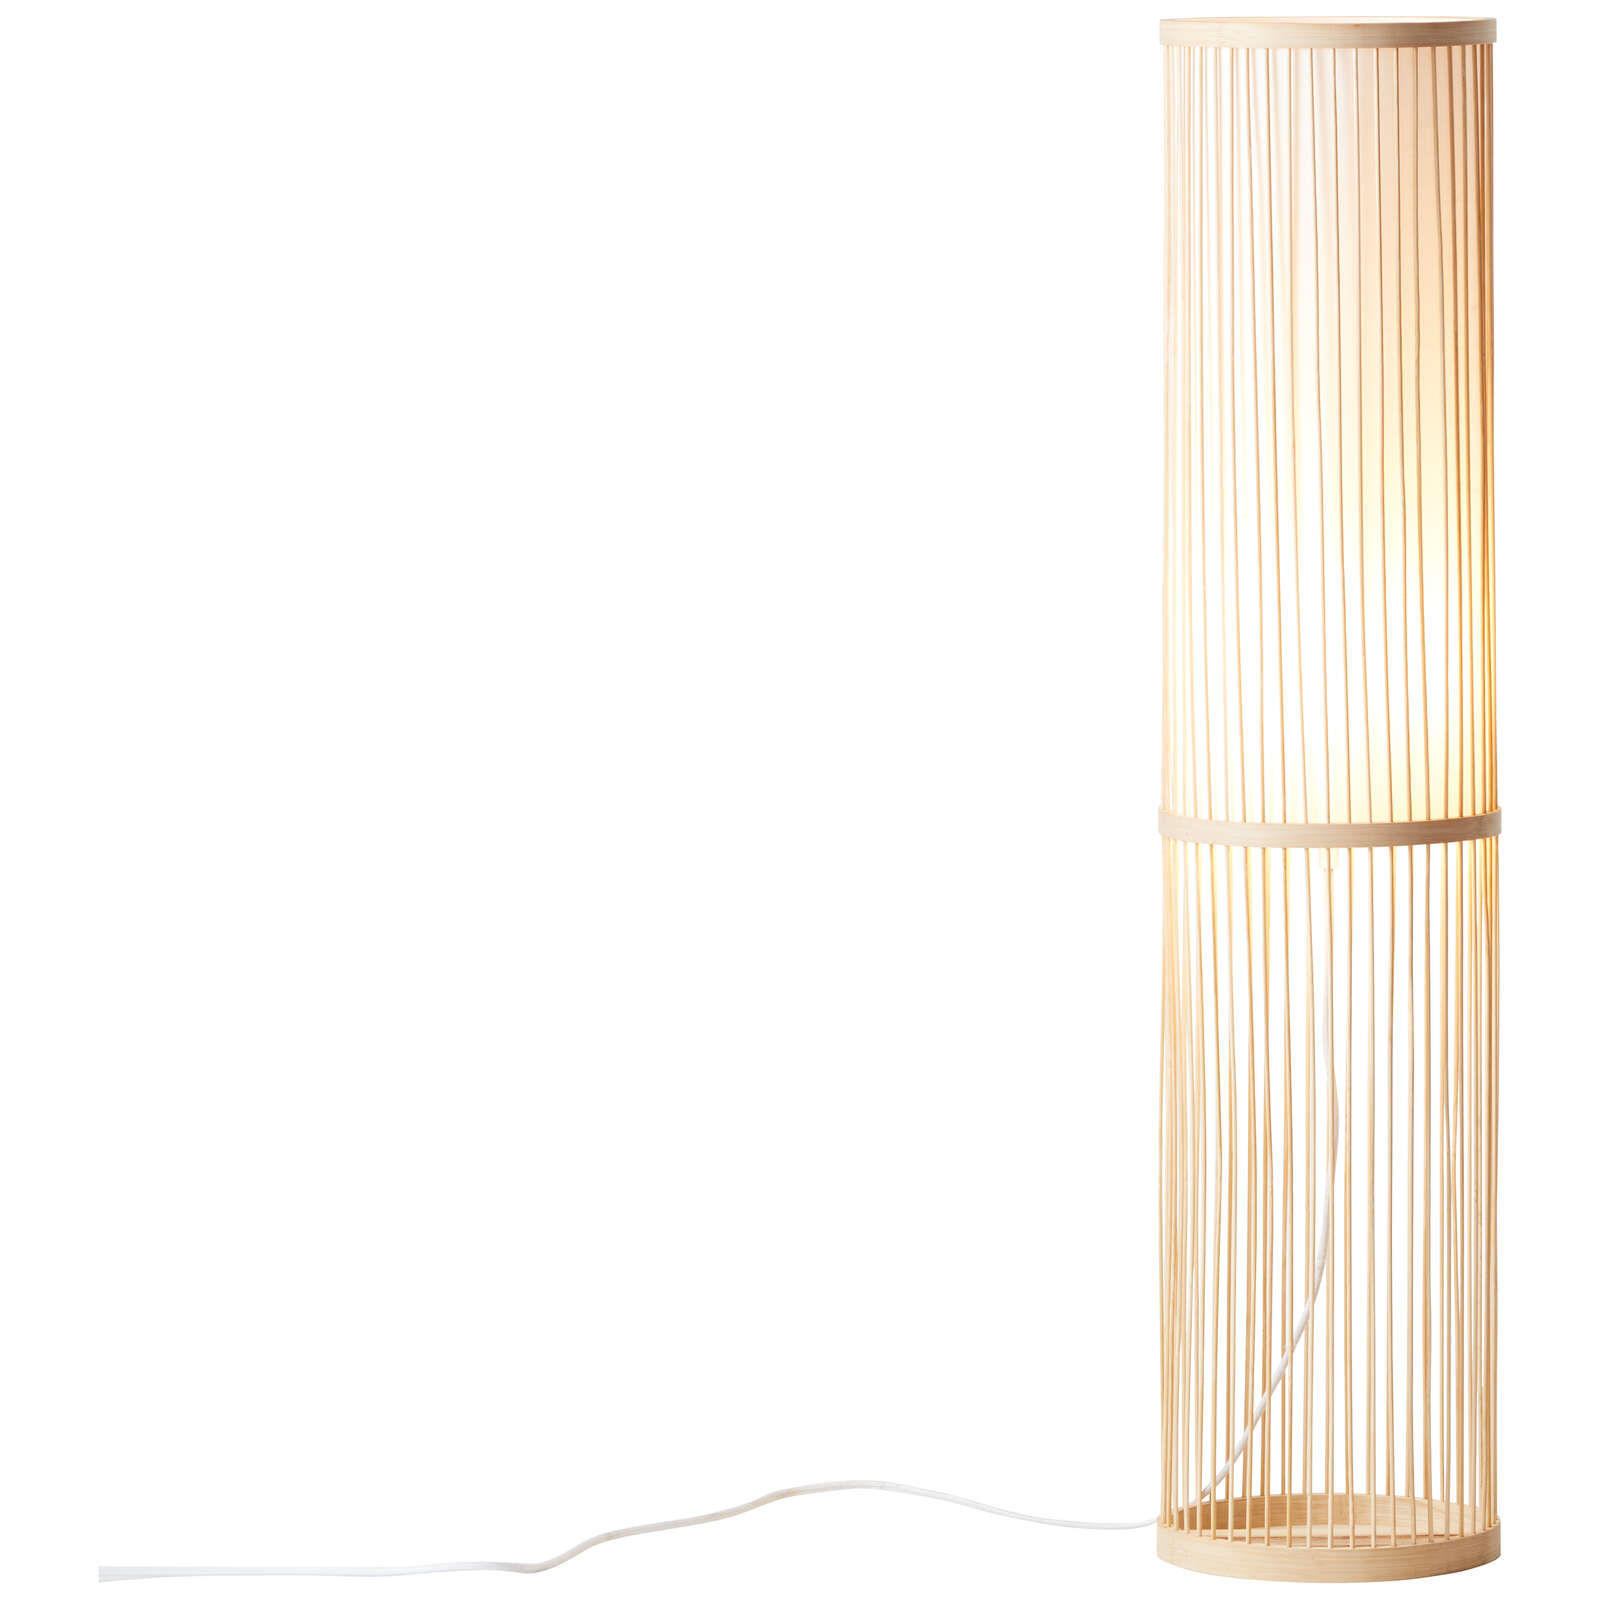             Bamboo floor lamp - Luise 1 - Brown
        